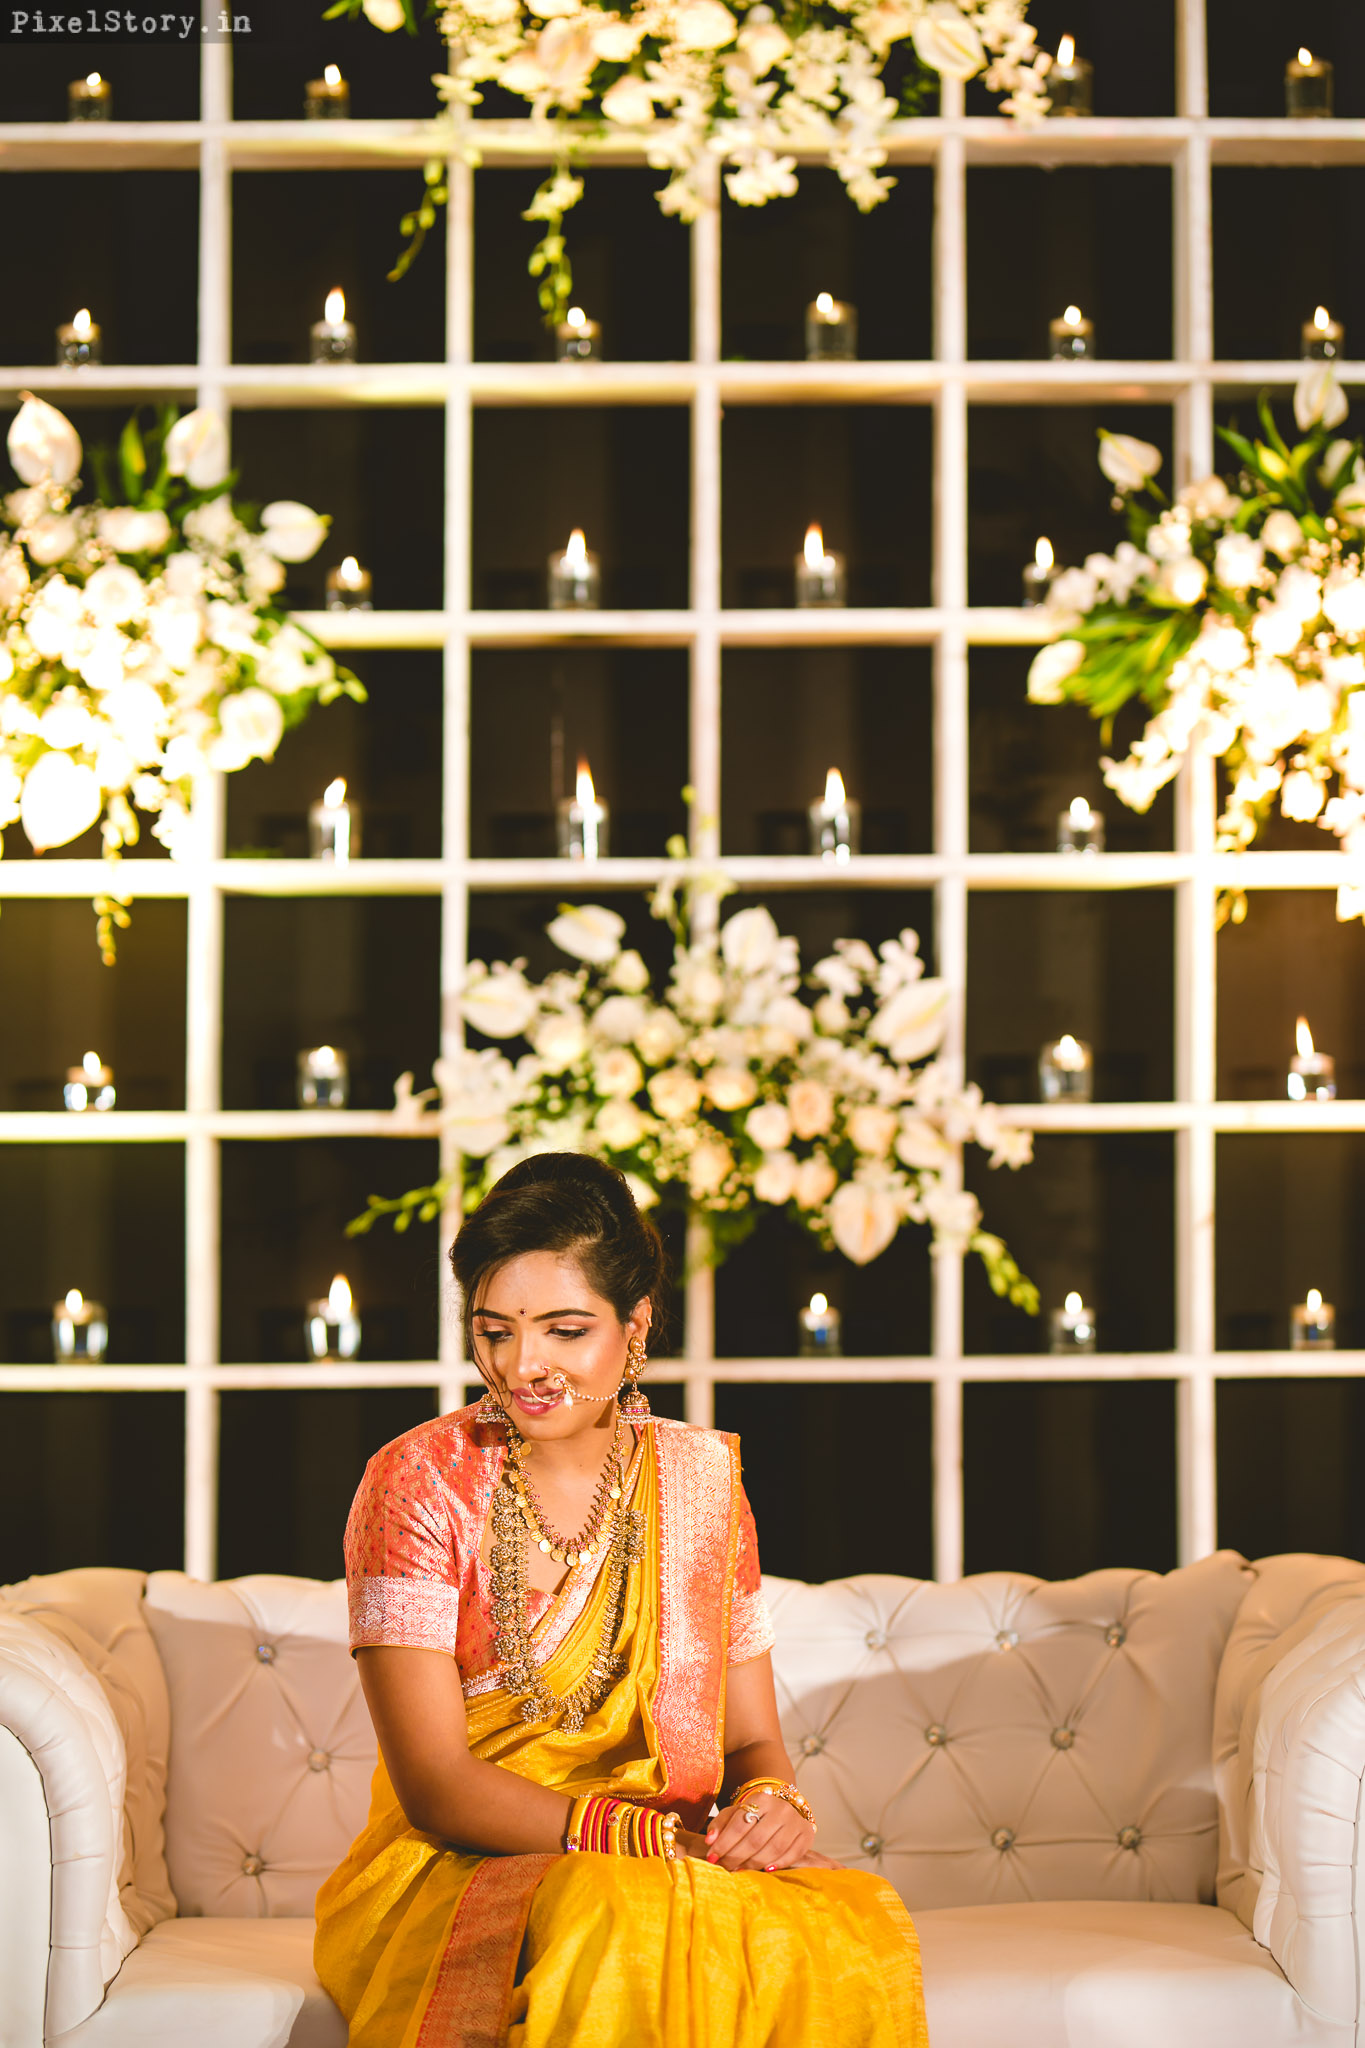 PixelStory-Engagement-Ritz-Carlton-Preksha-Bharath-009.jpg